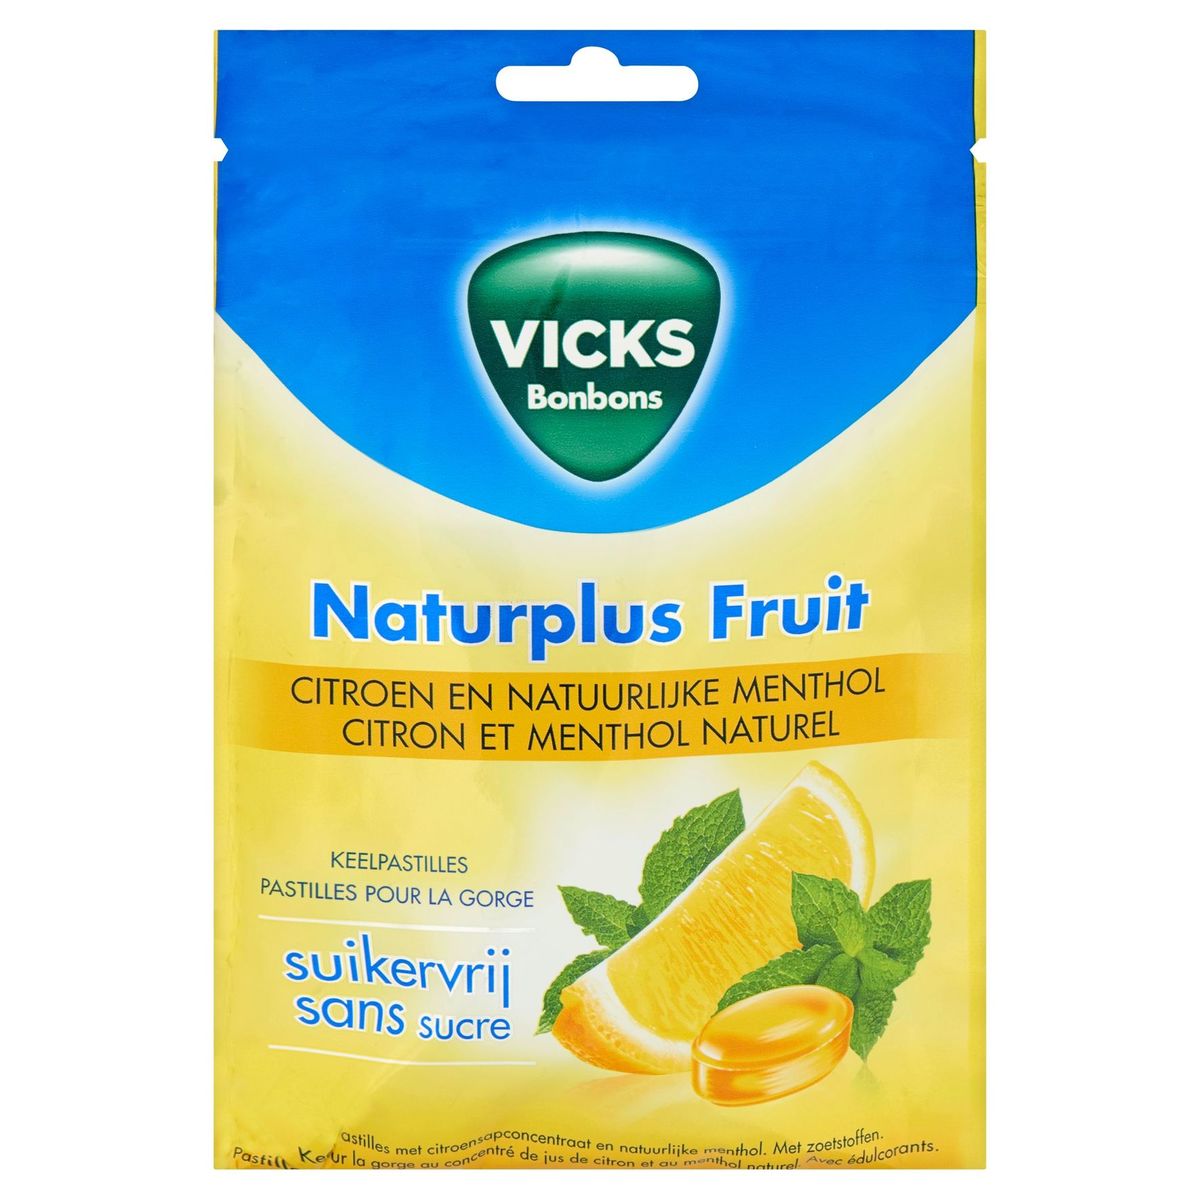 Vicks Bonbons Naturplus Fruit Citron et Menthol Naturel 72 g